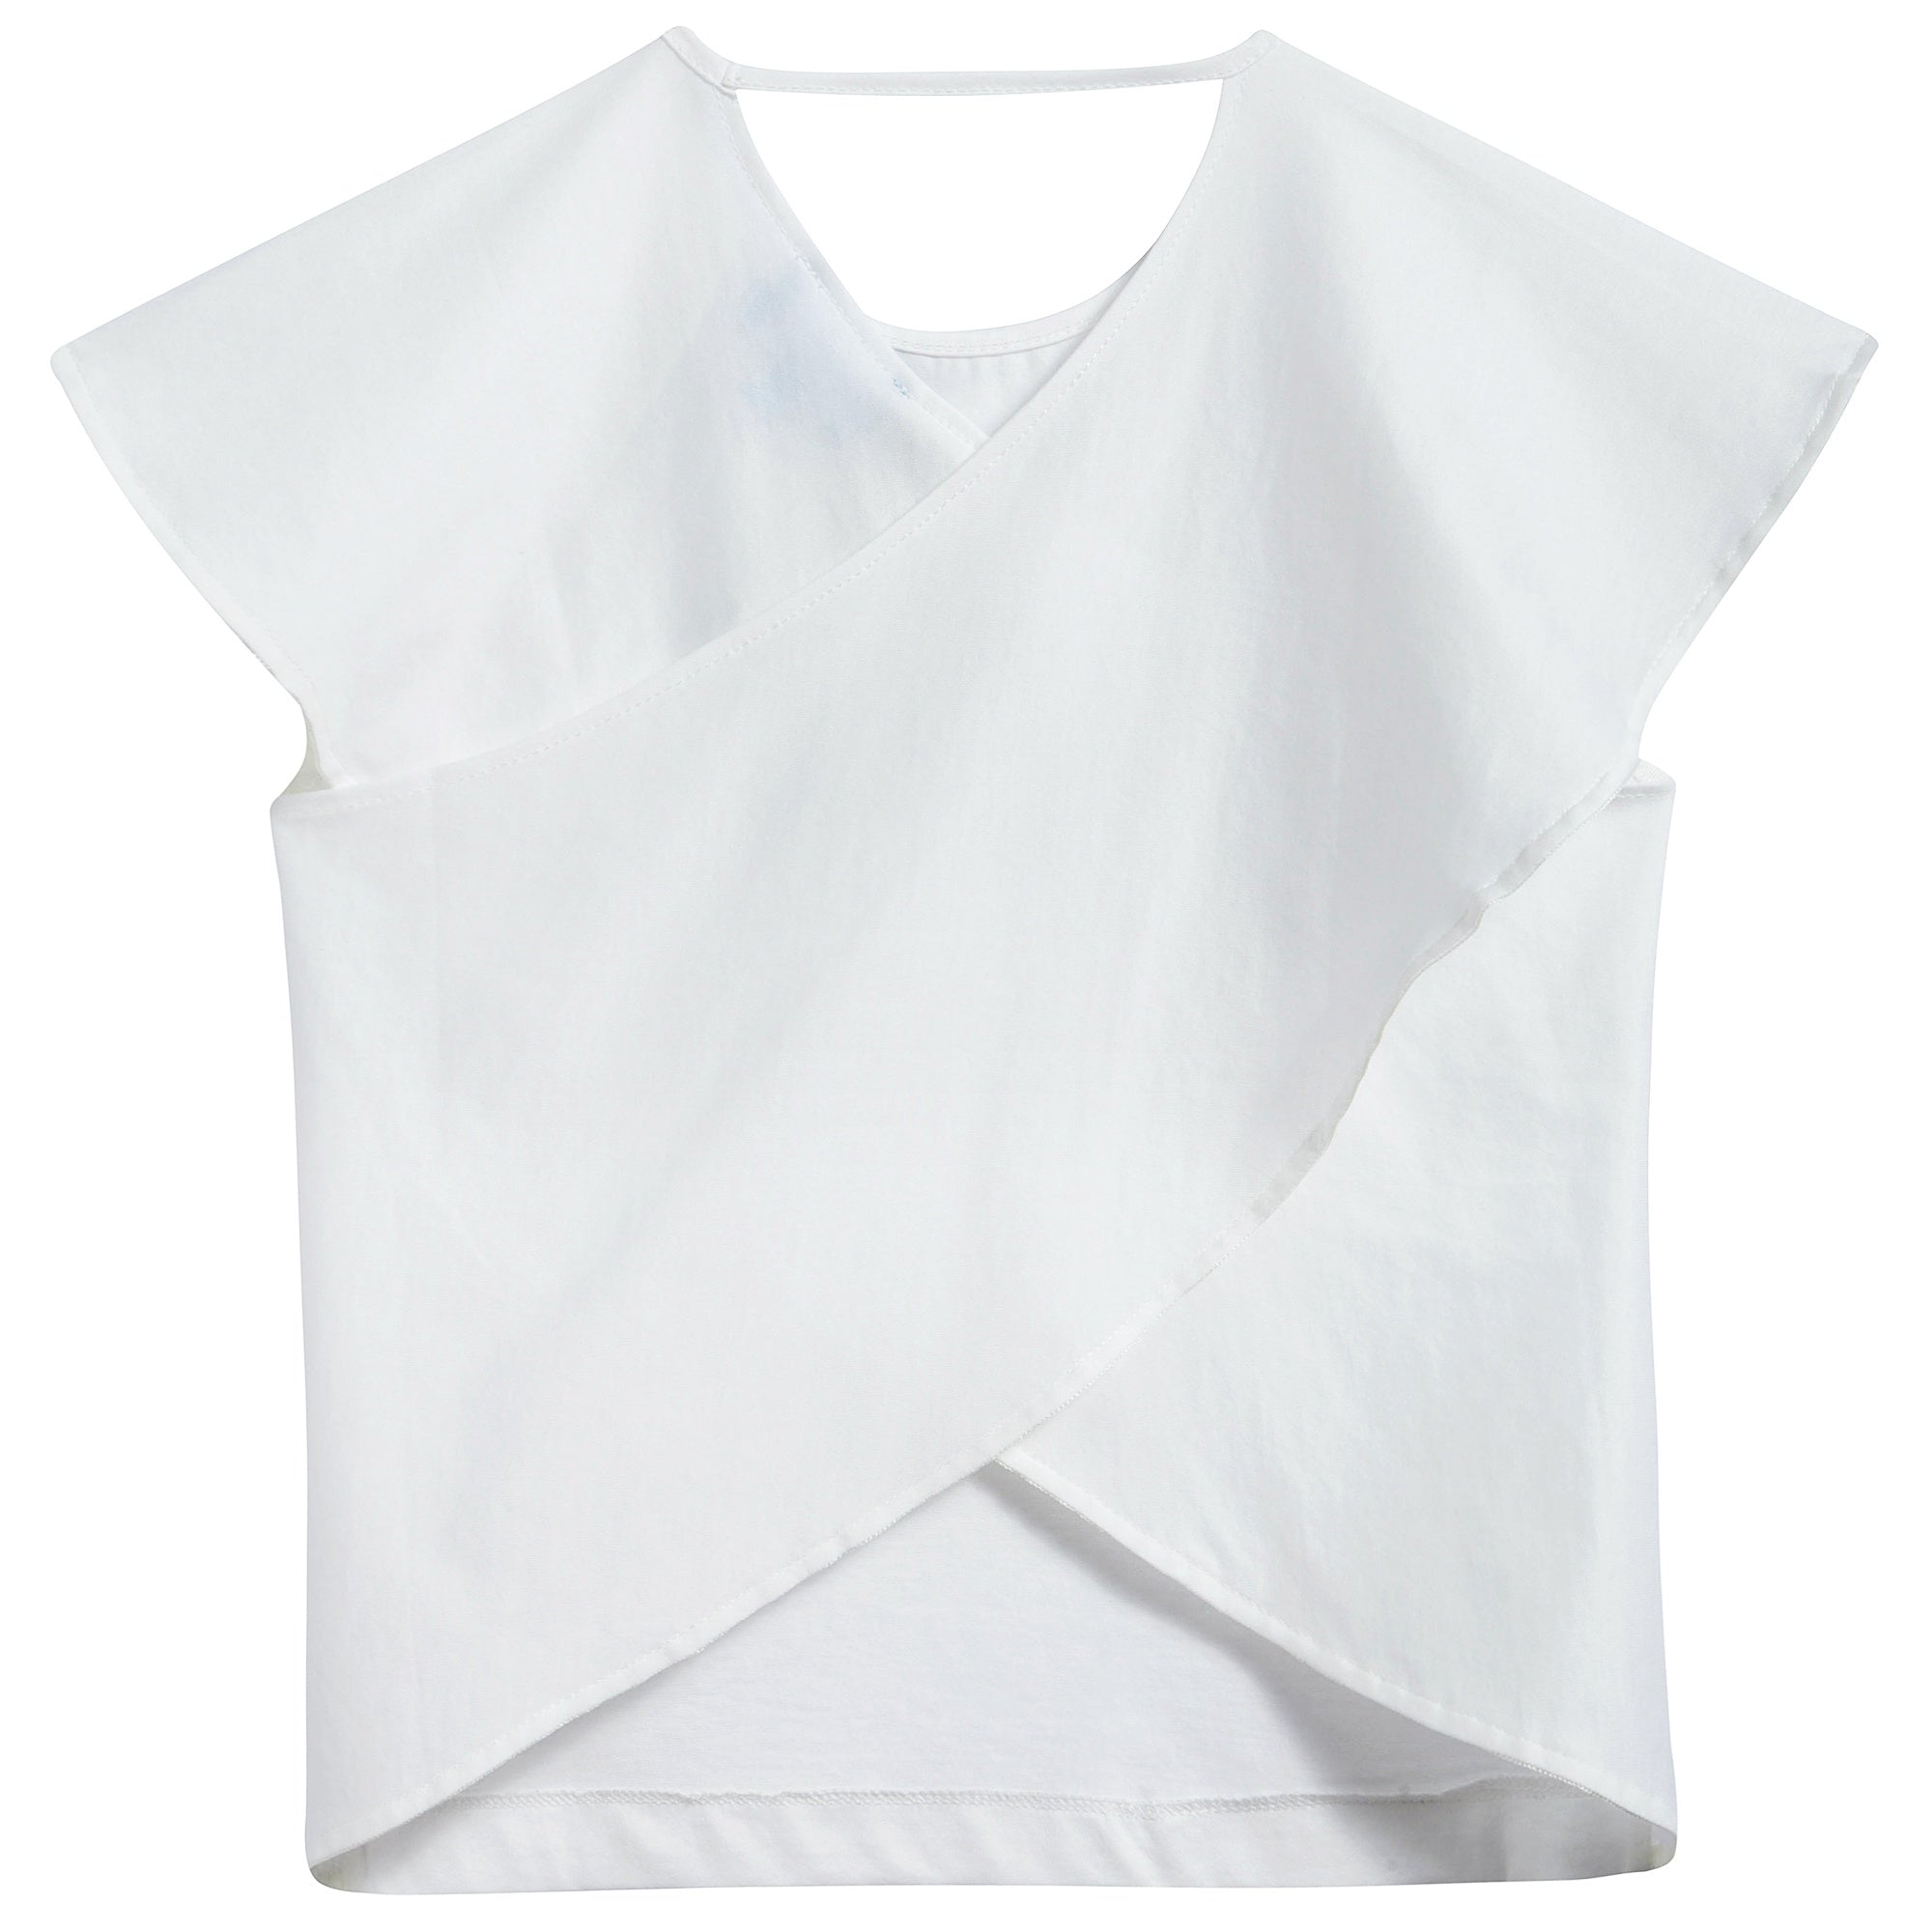 Girls White Cotton T-shirt